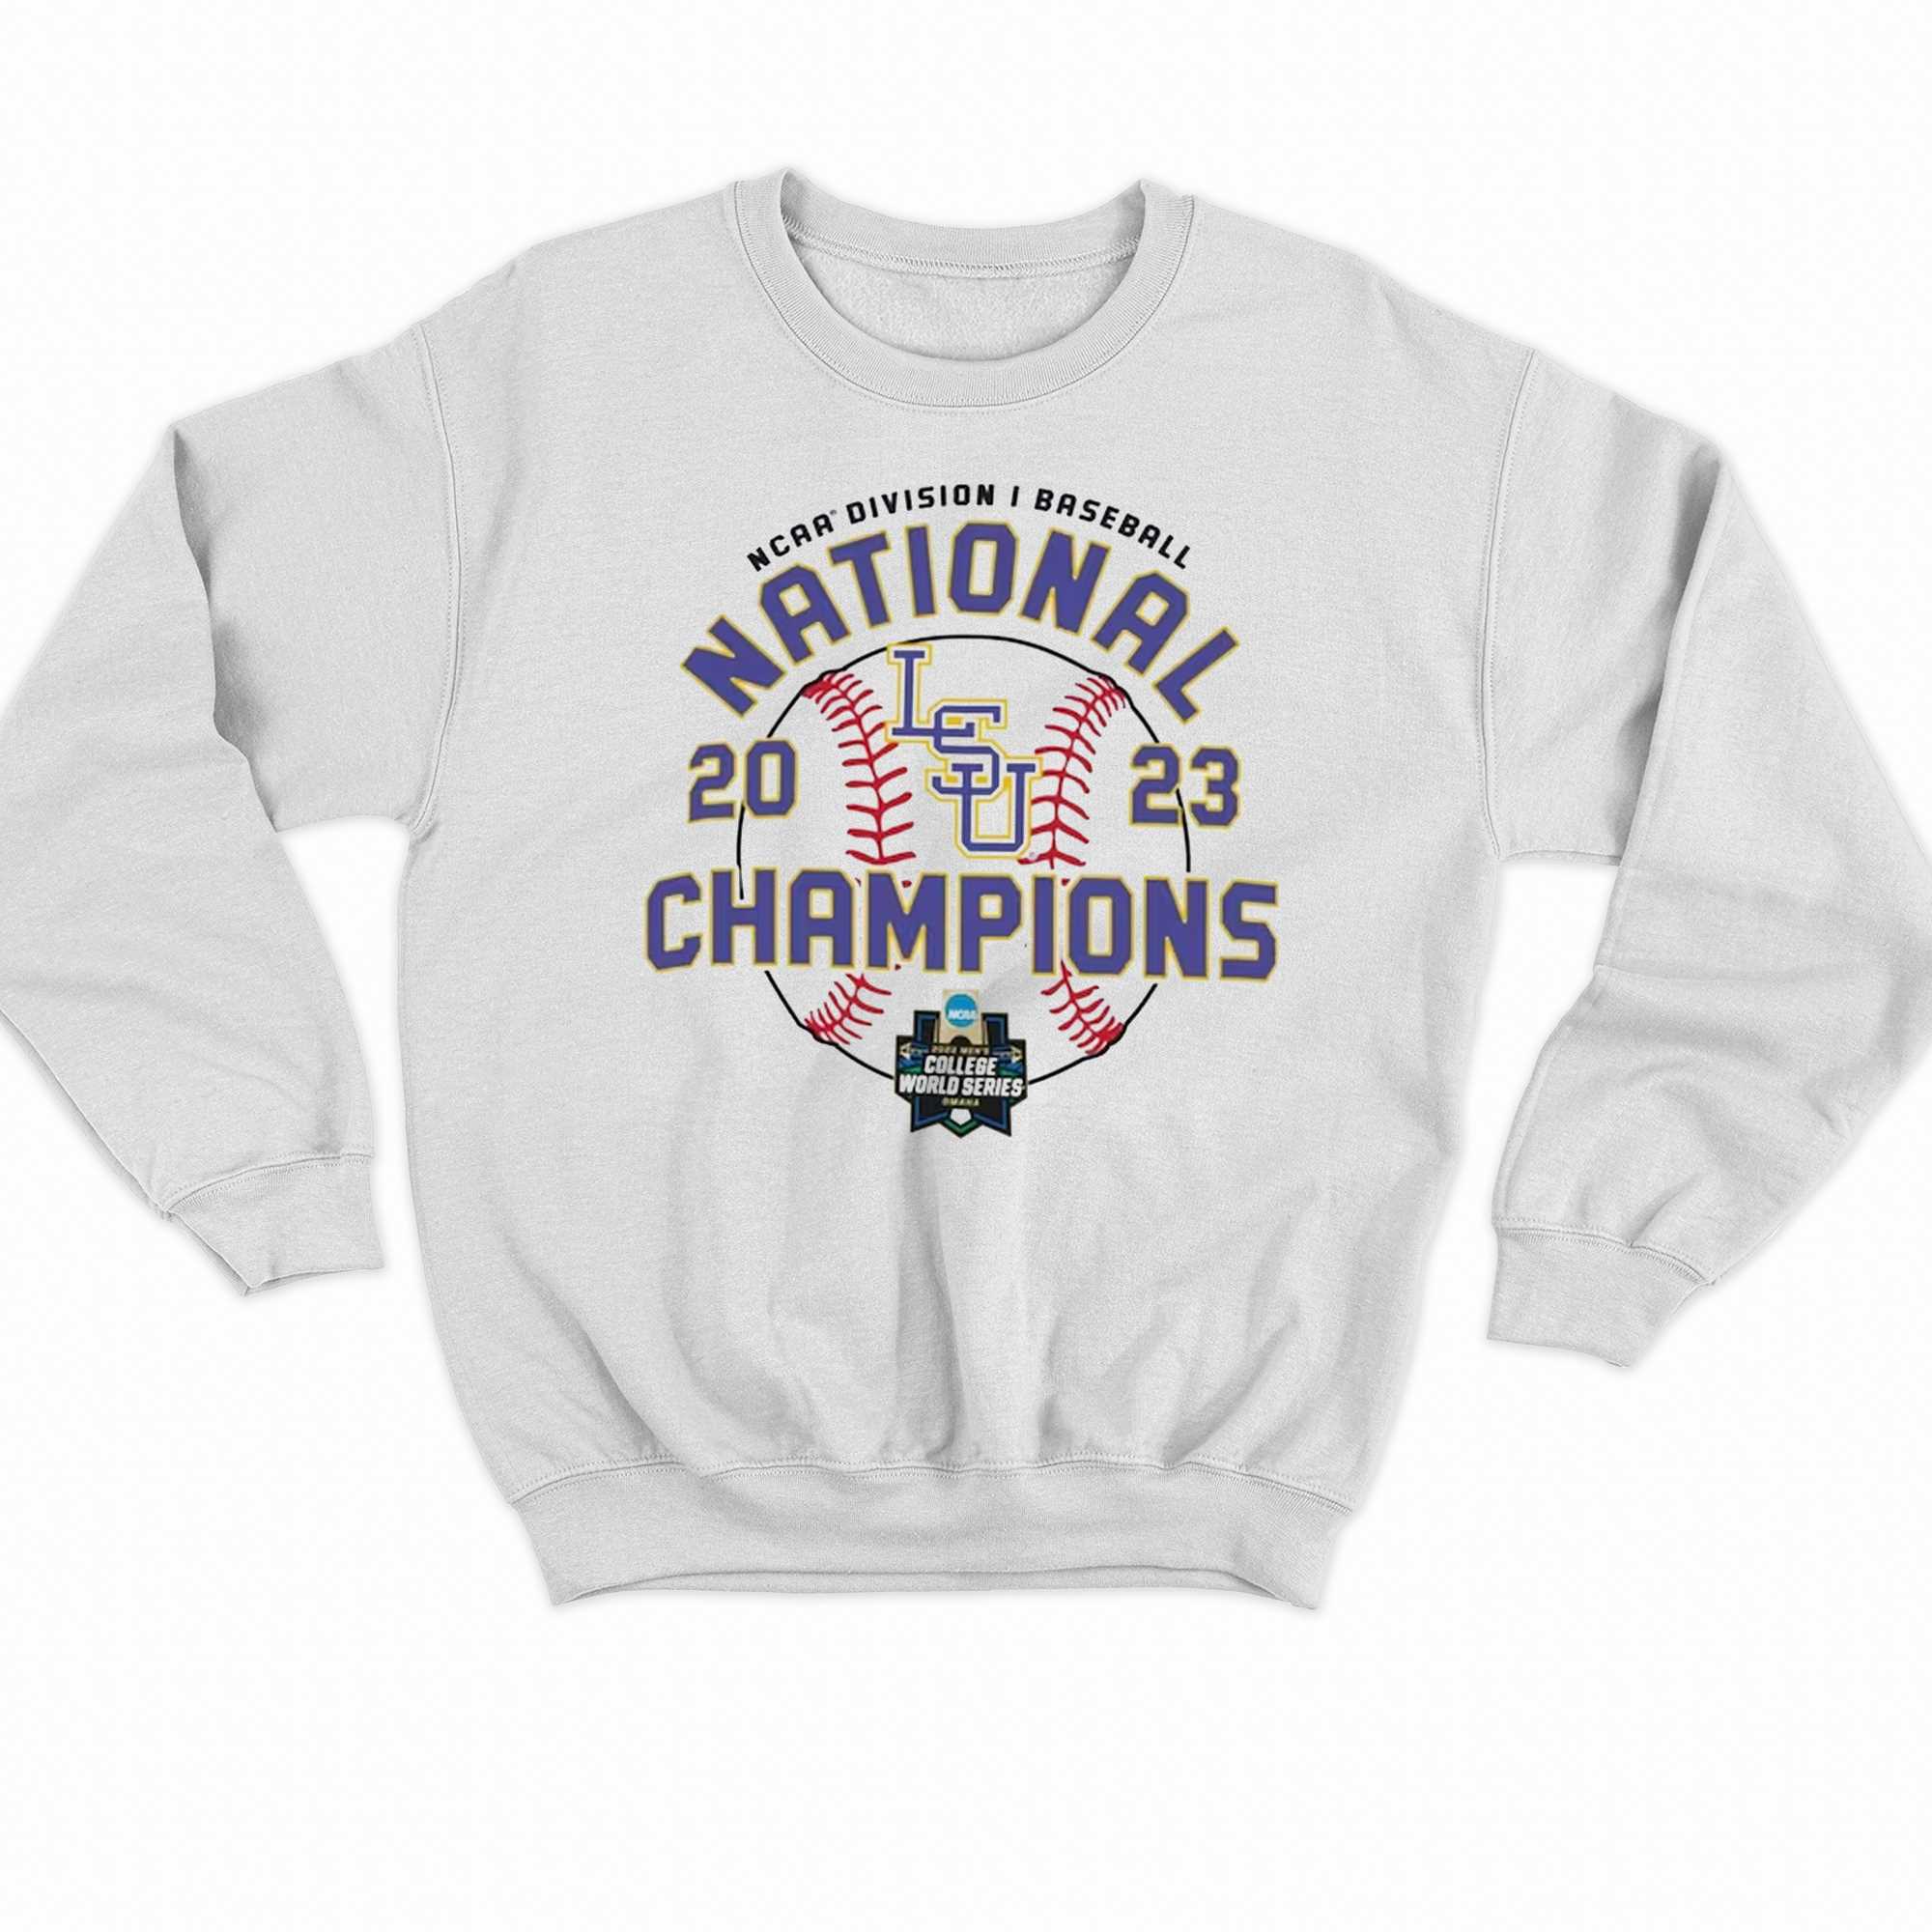 LSU National Champions Shirt - Gray exclusive at Tiger Nation